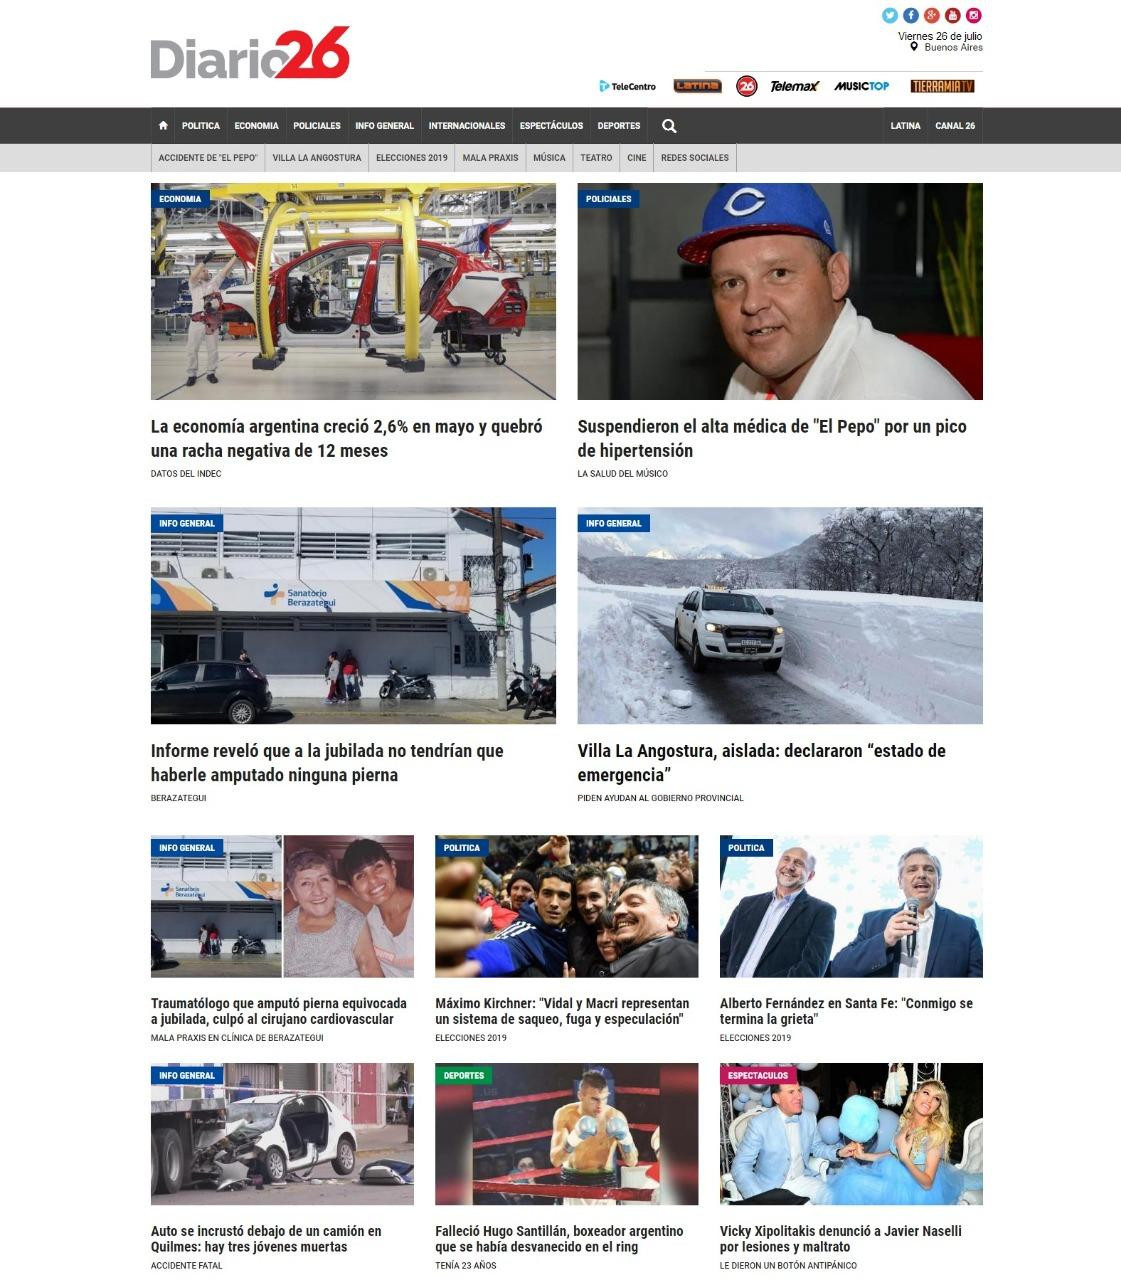 Tapas de diarios, Diario 26, viernes 26-07-19